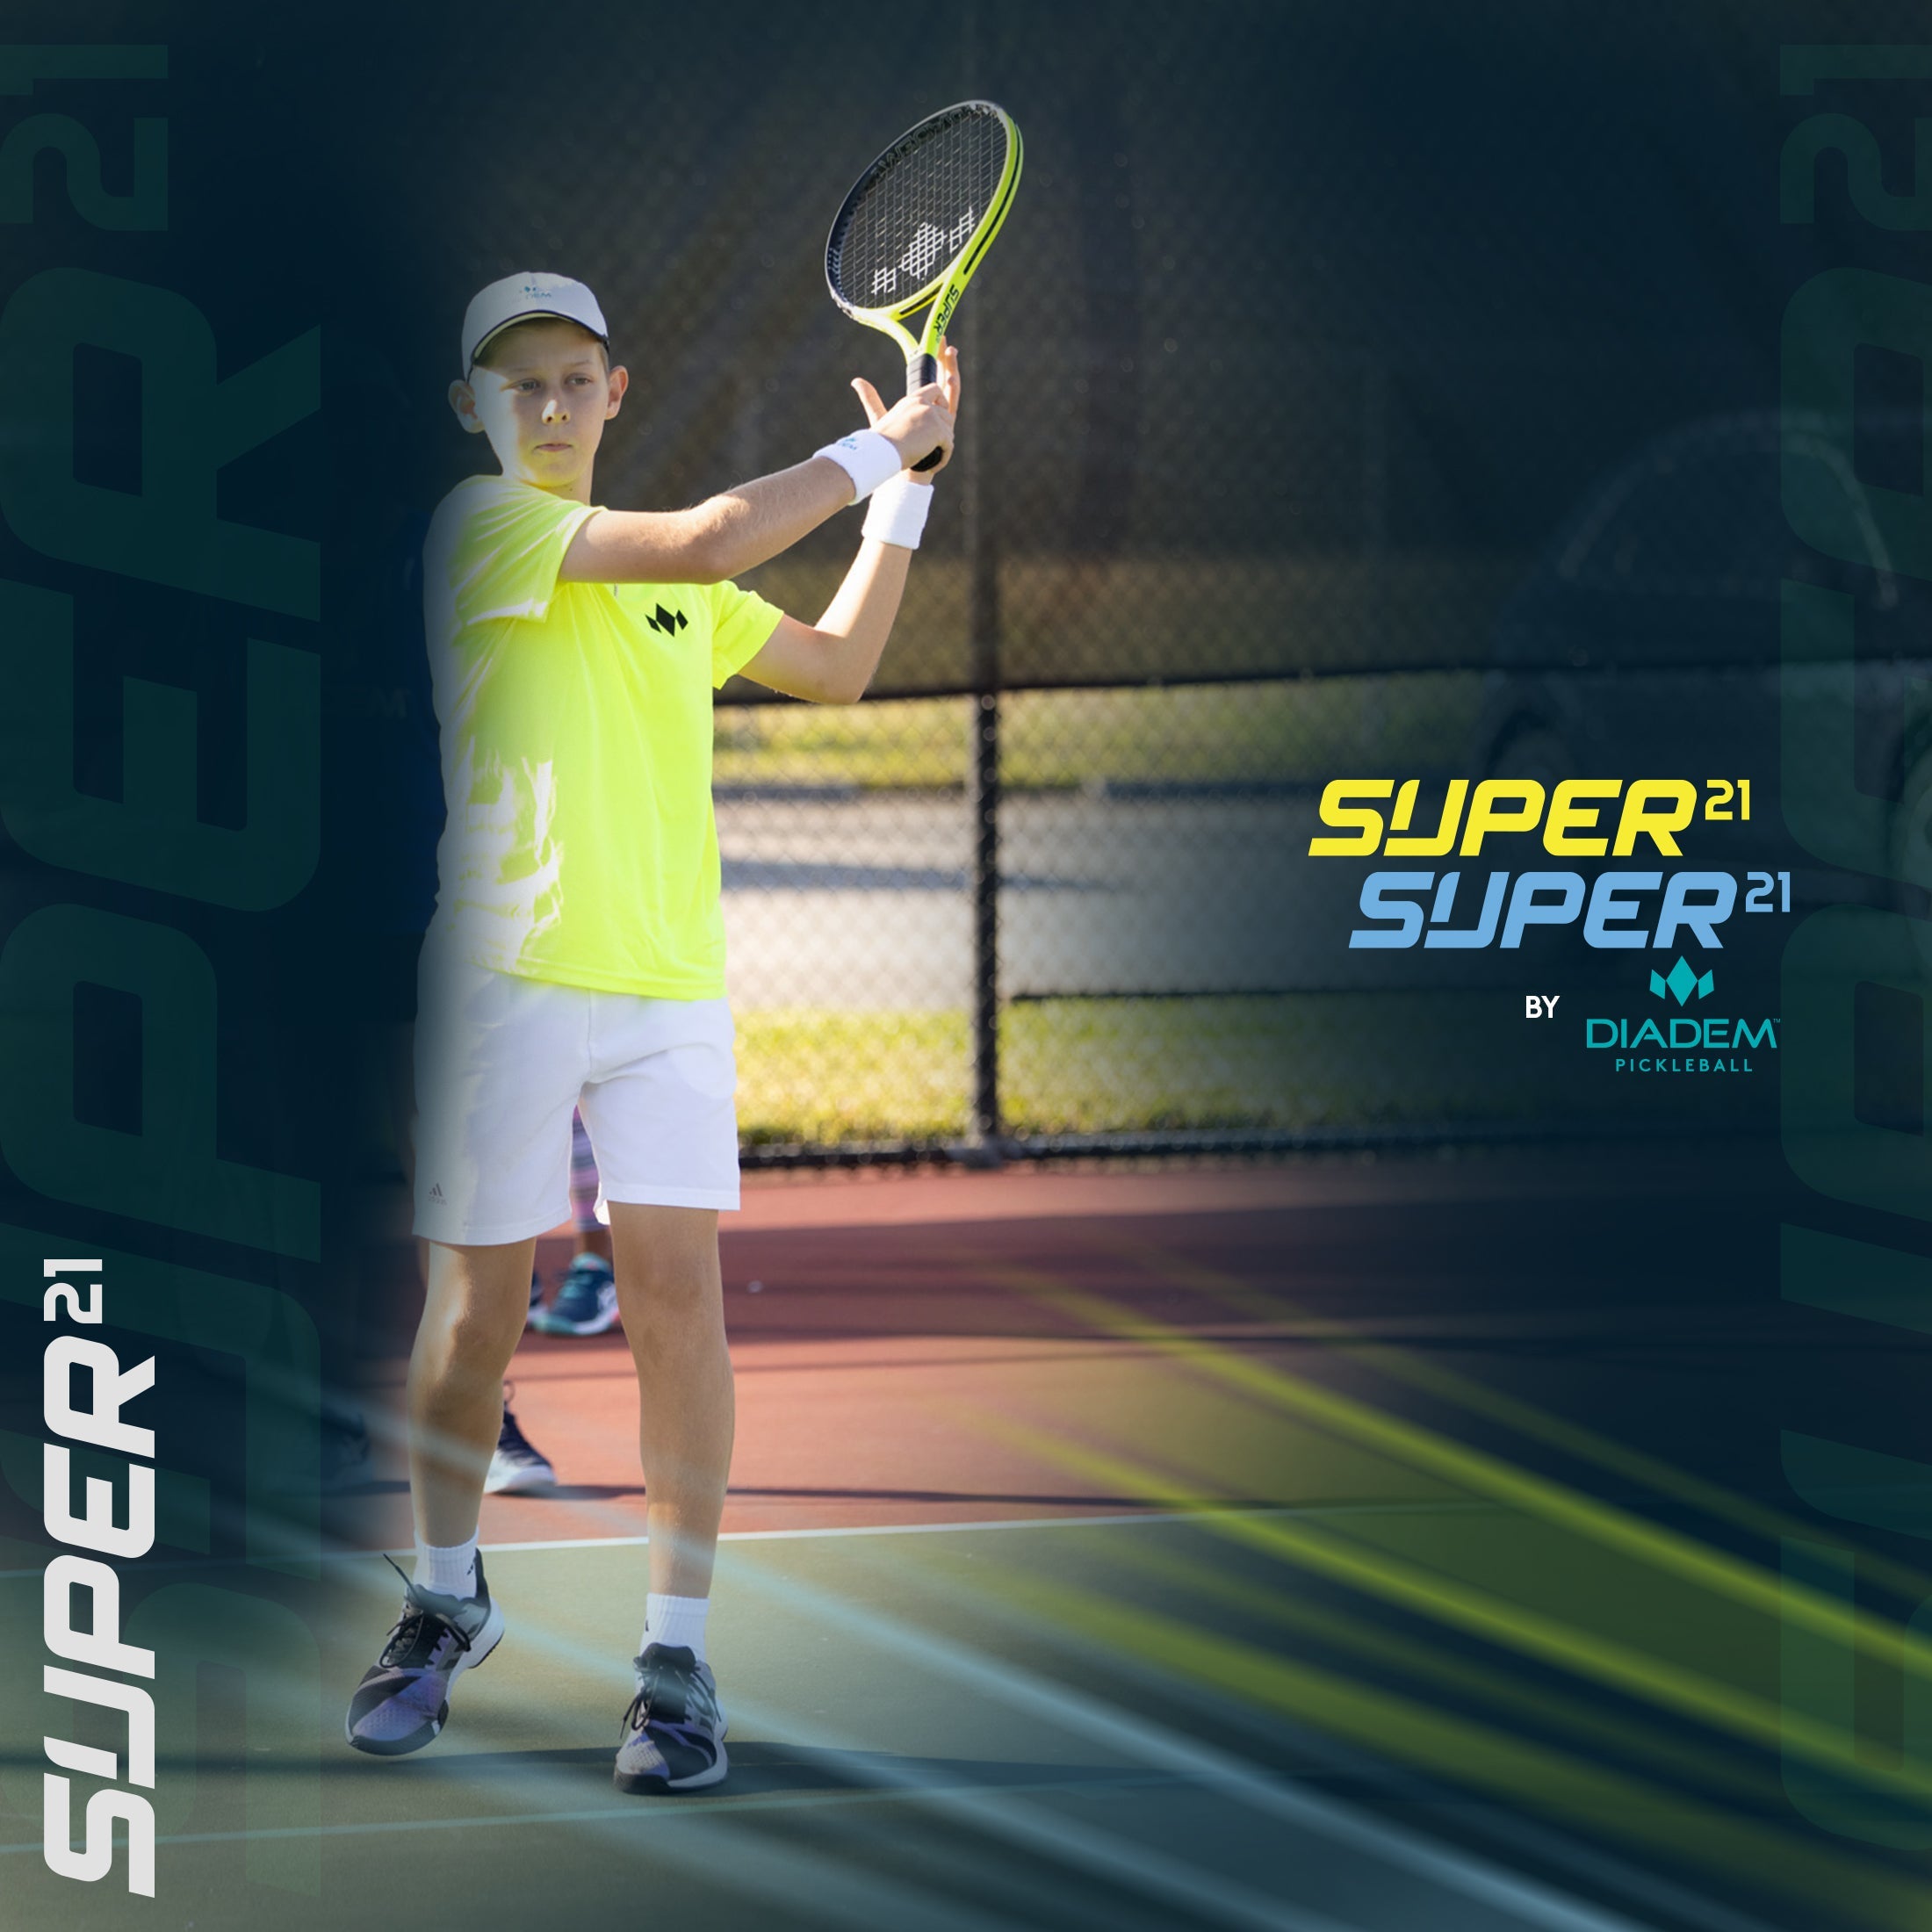 Super 21 Junior Racket